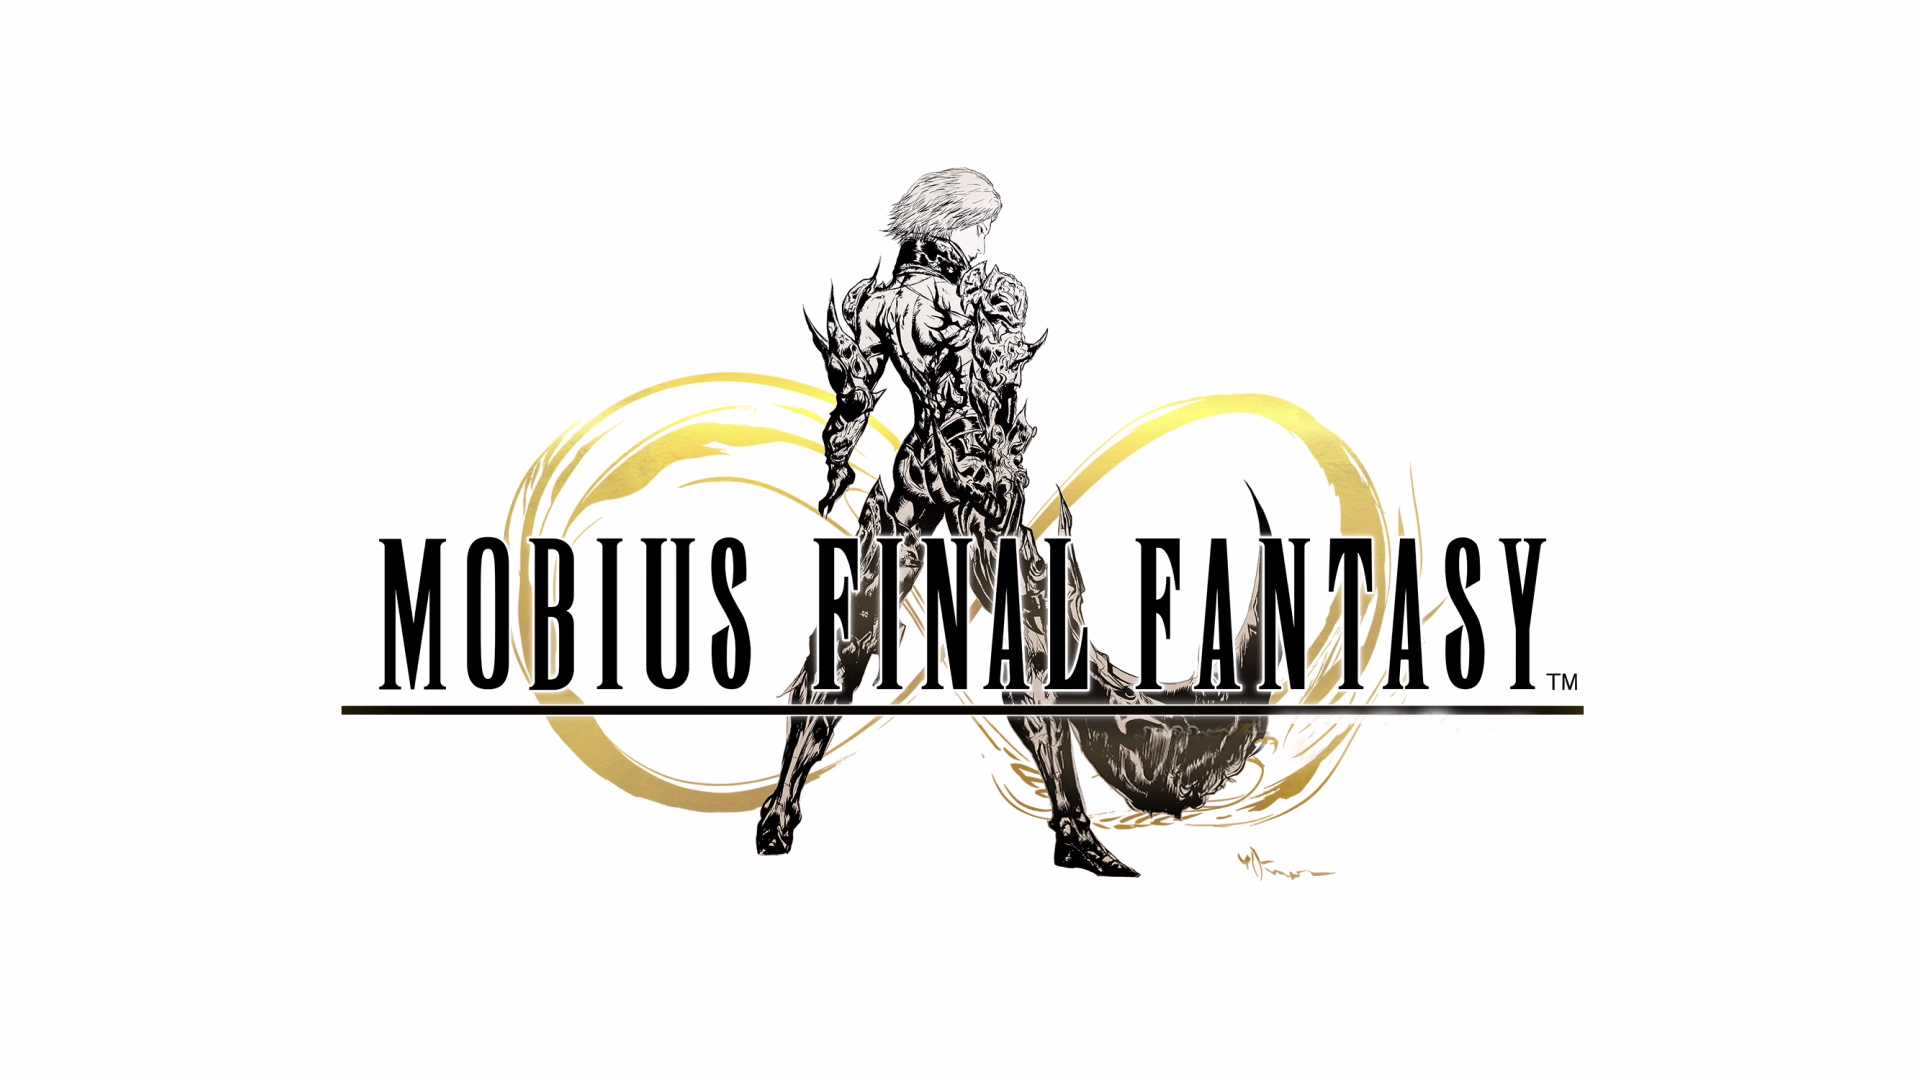 Mobius Final Fantasy accoglie Sephiroth in un nuovo evento